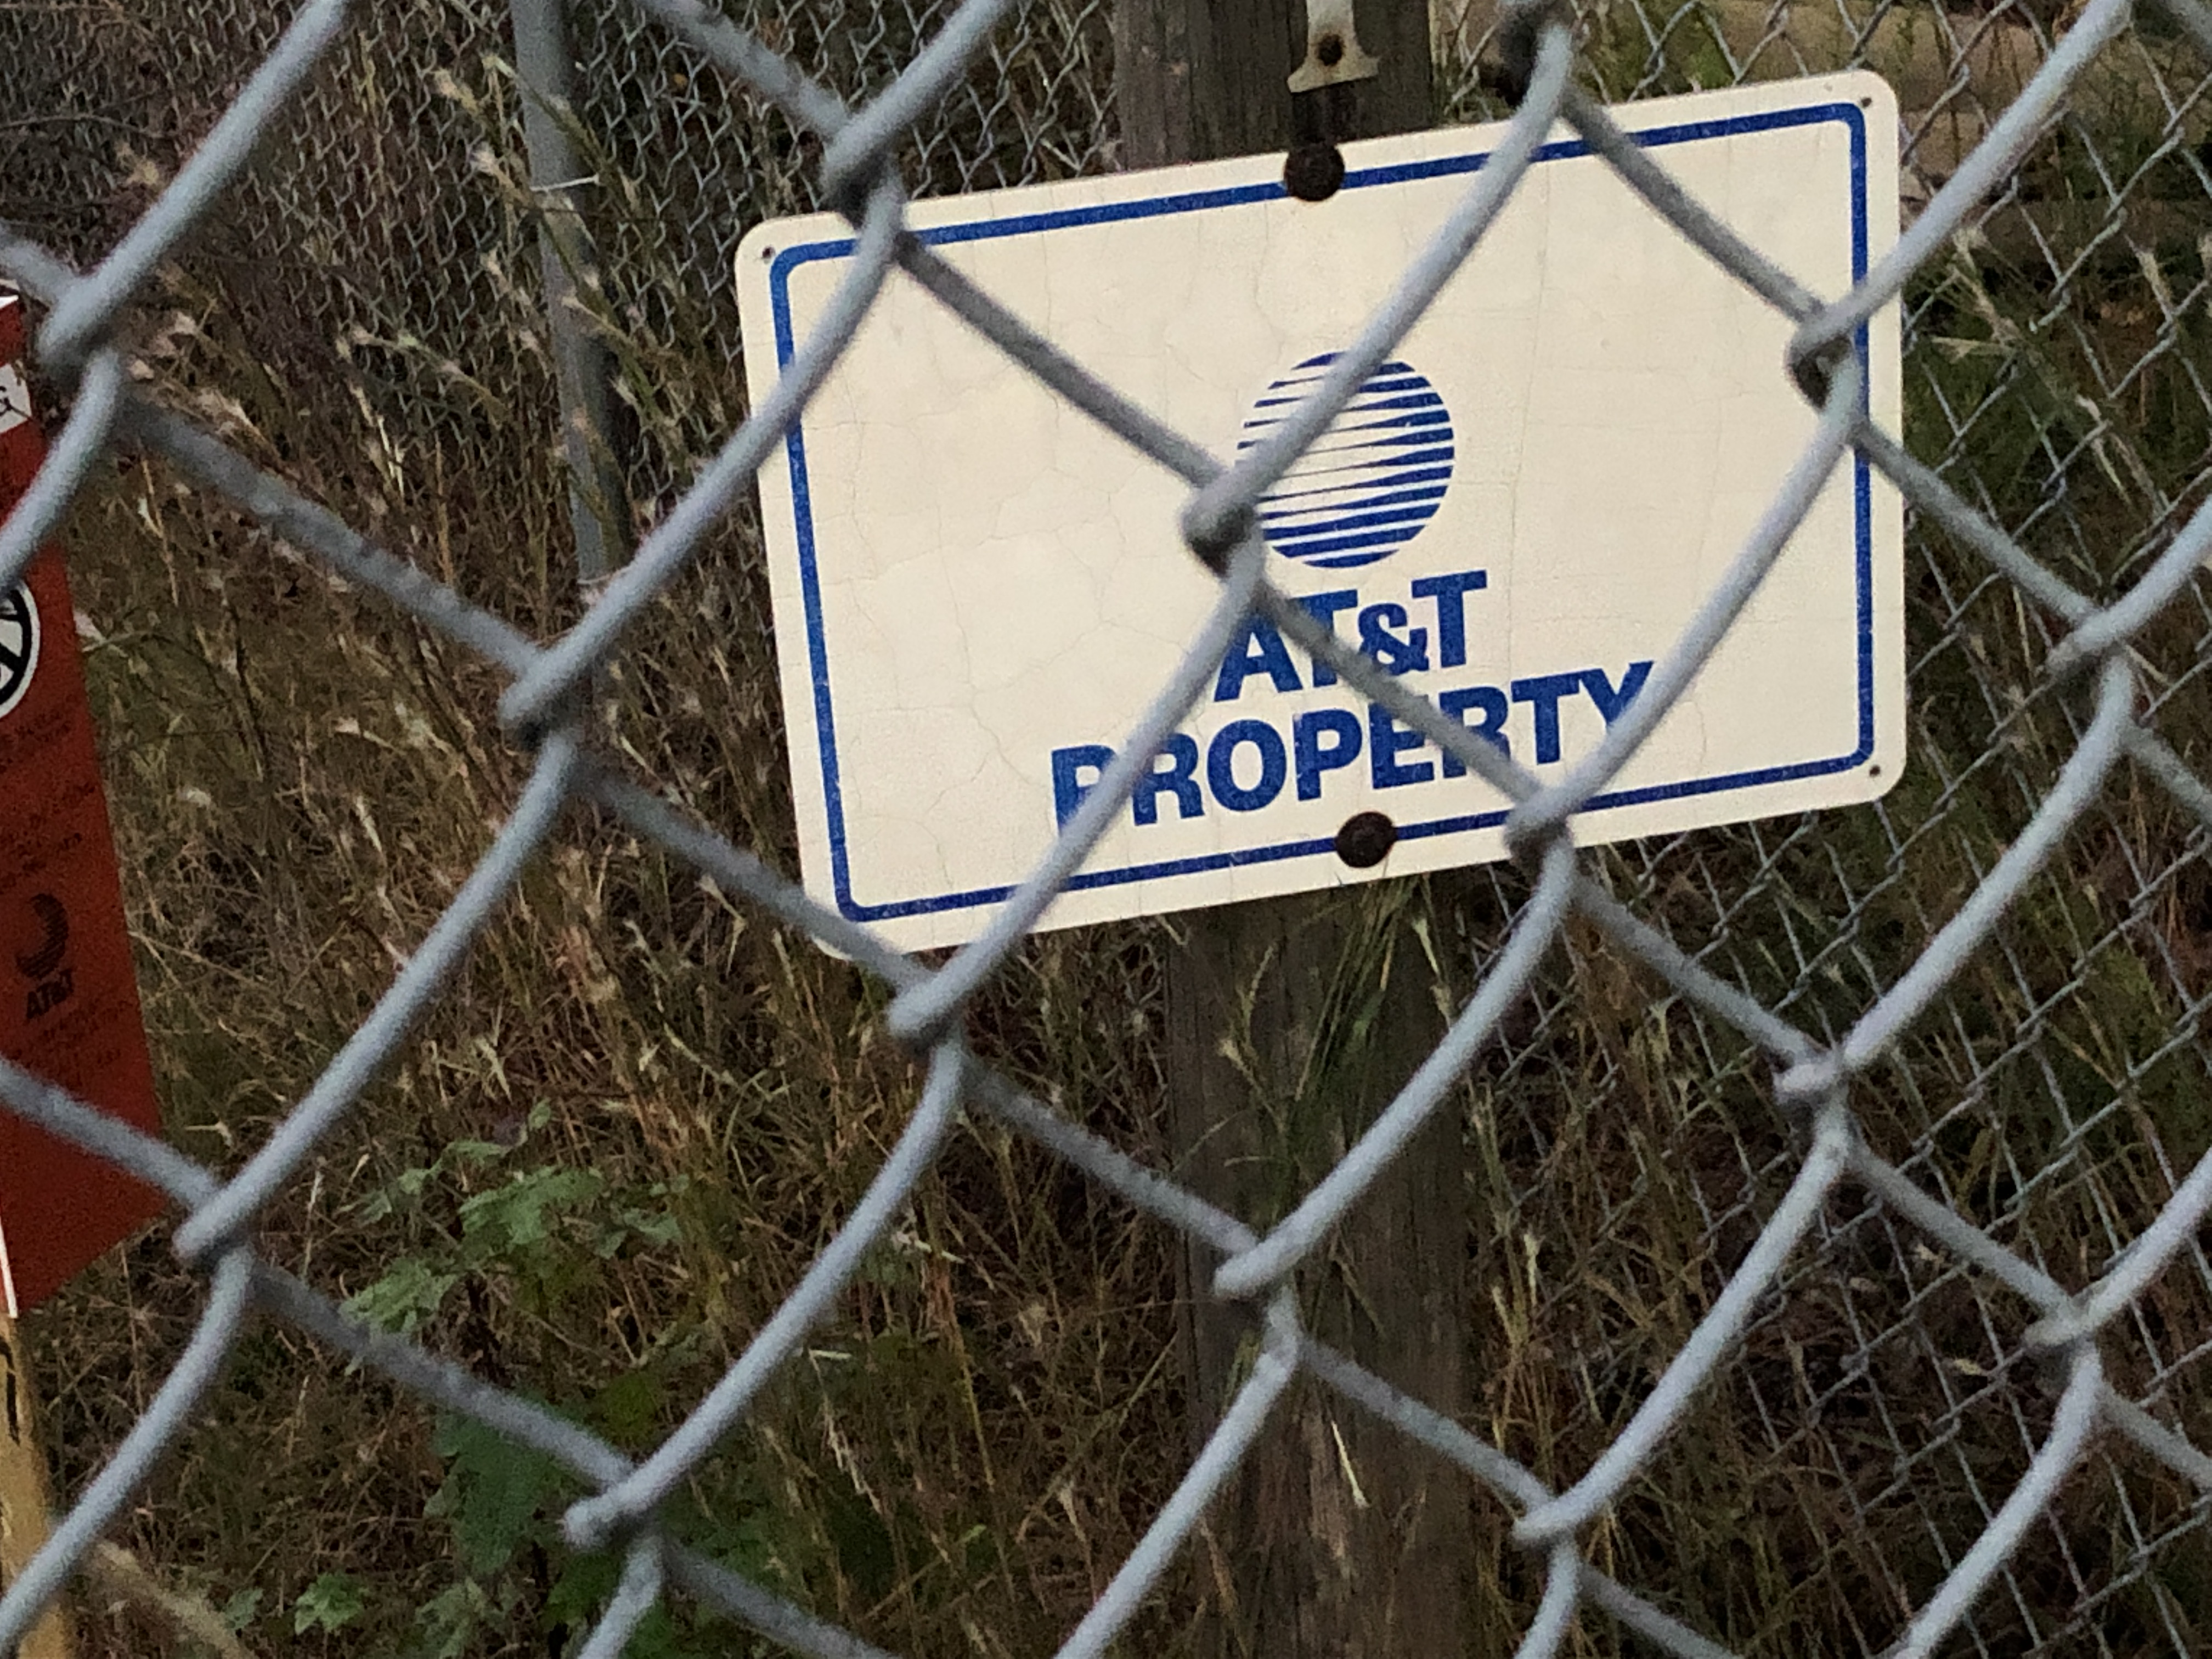 AT&T Property!